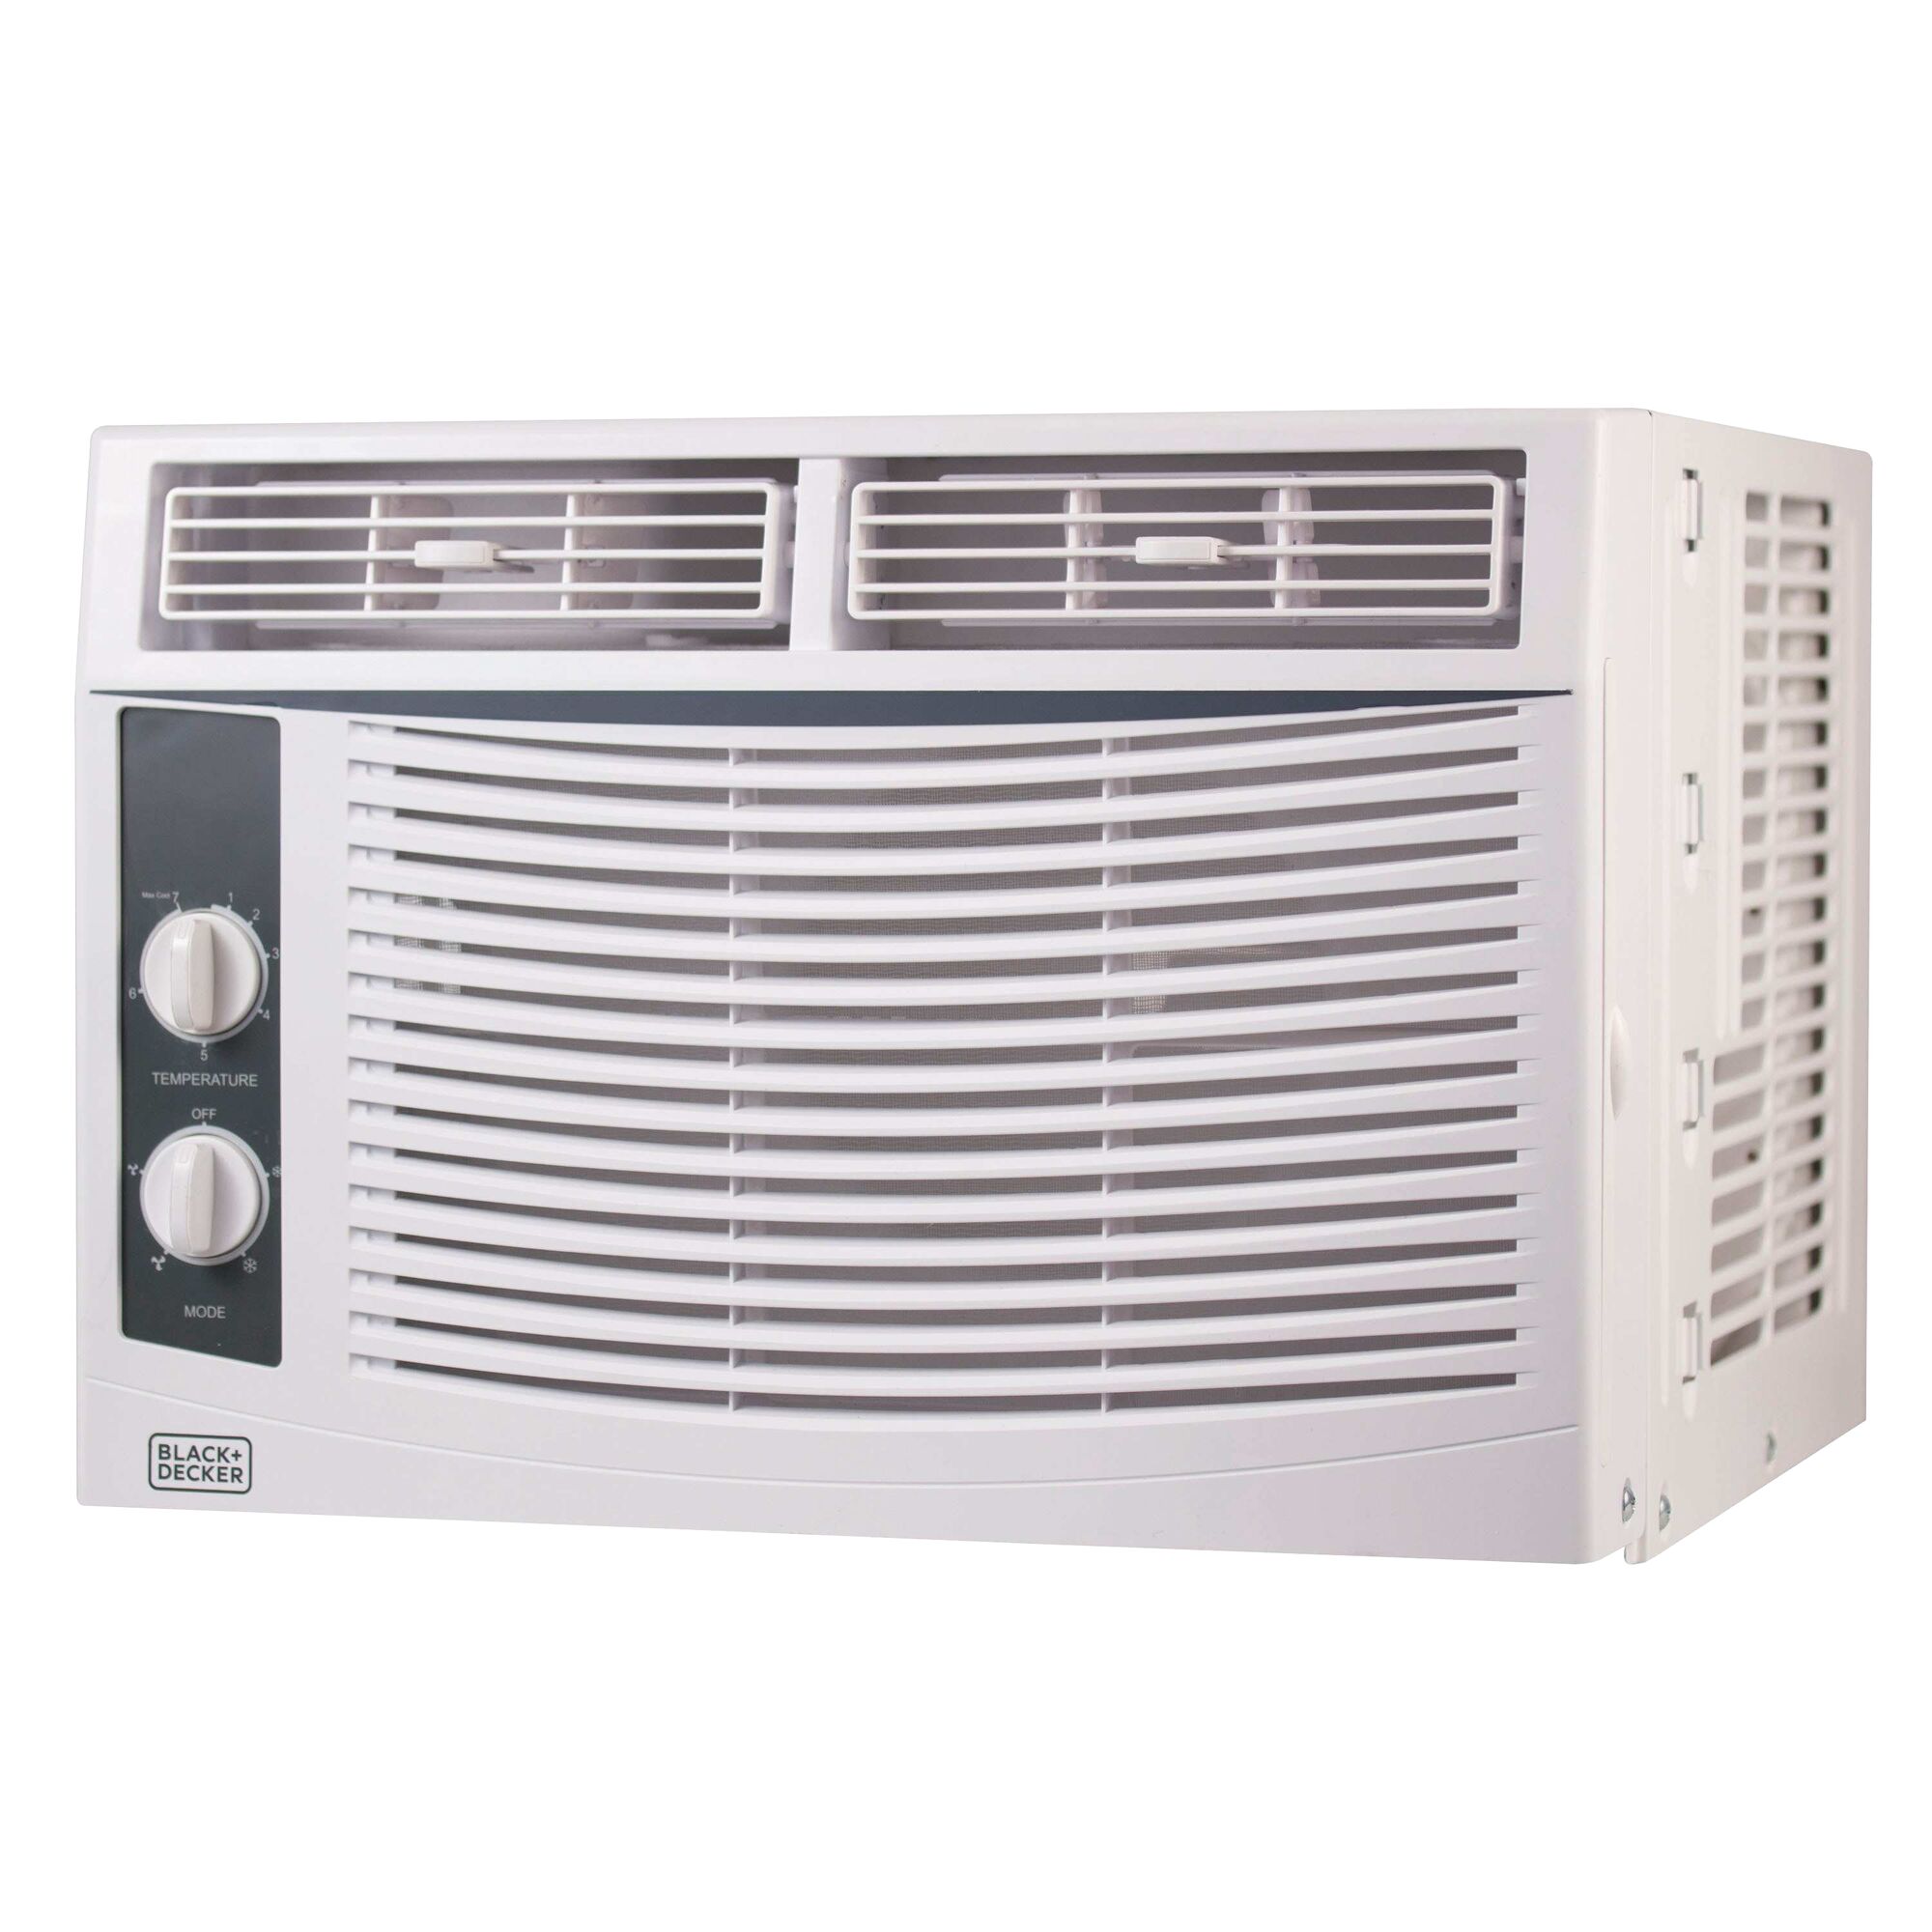 Profile of 5000 B T U mechanical window air conditioner.